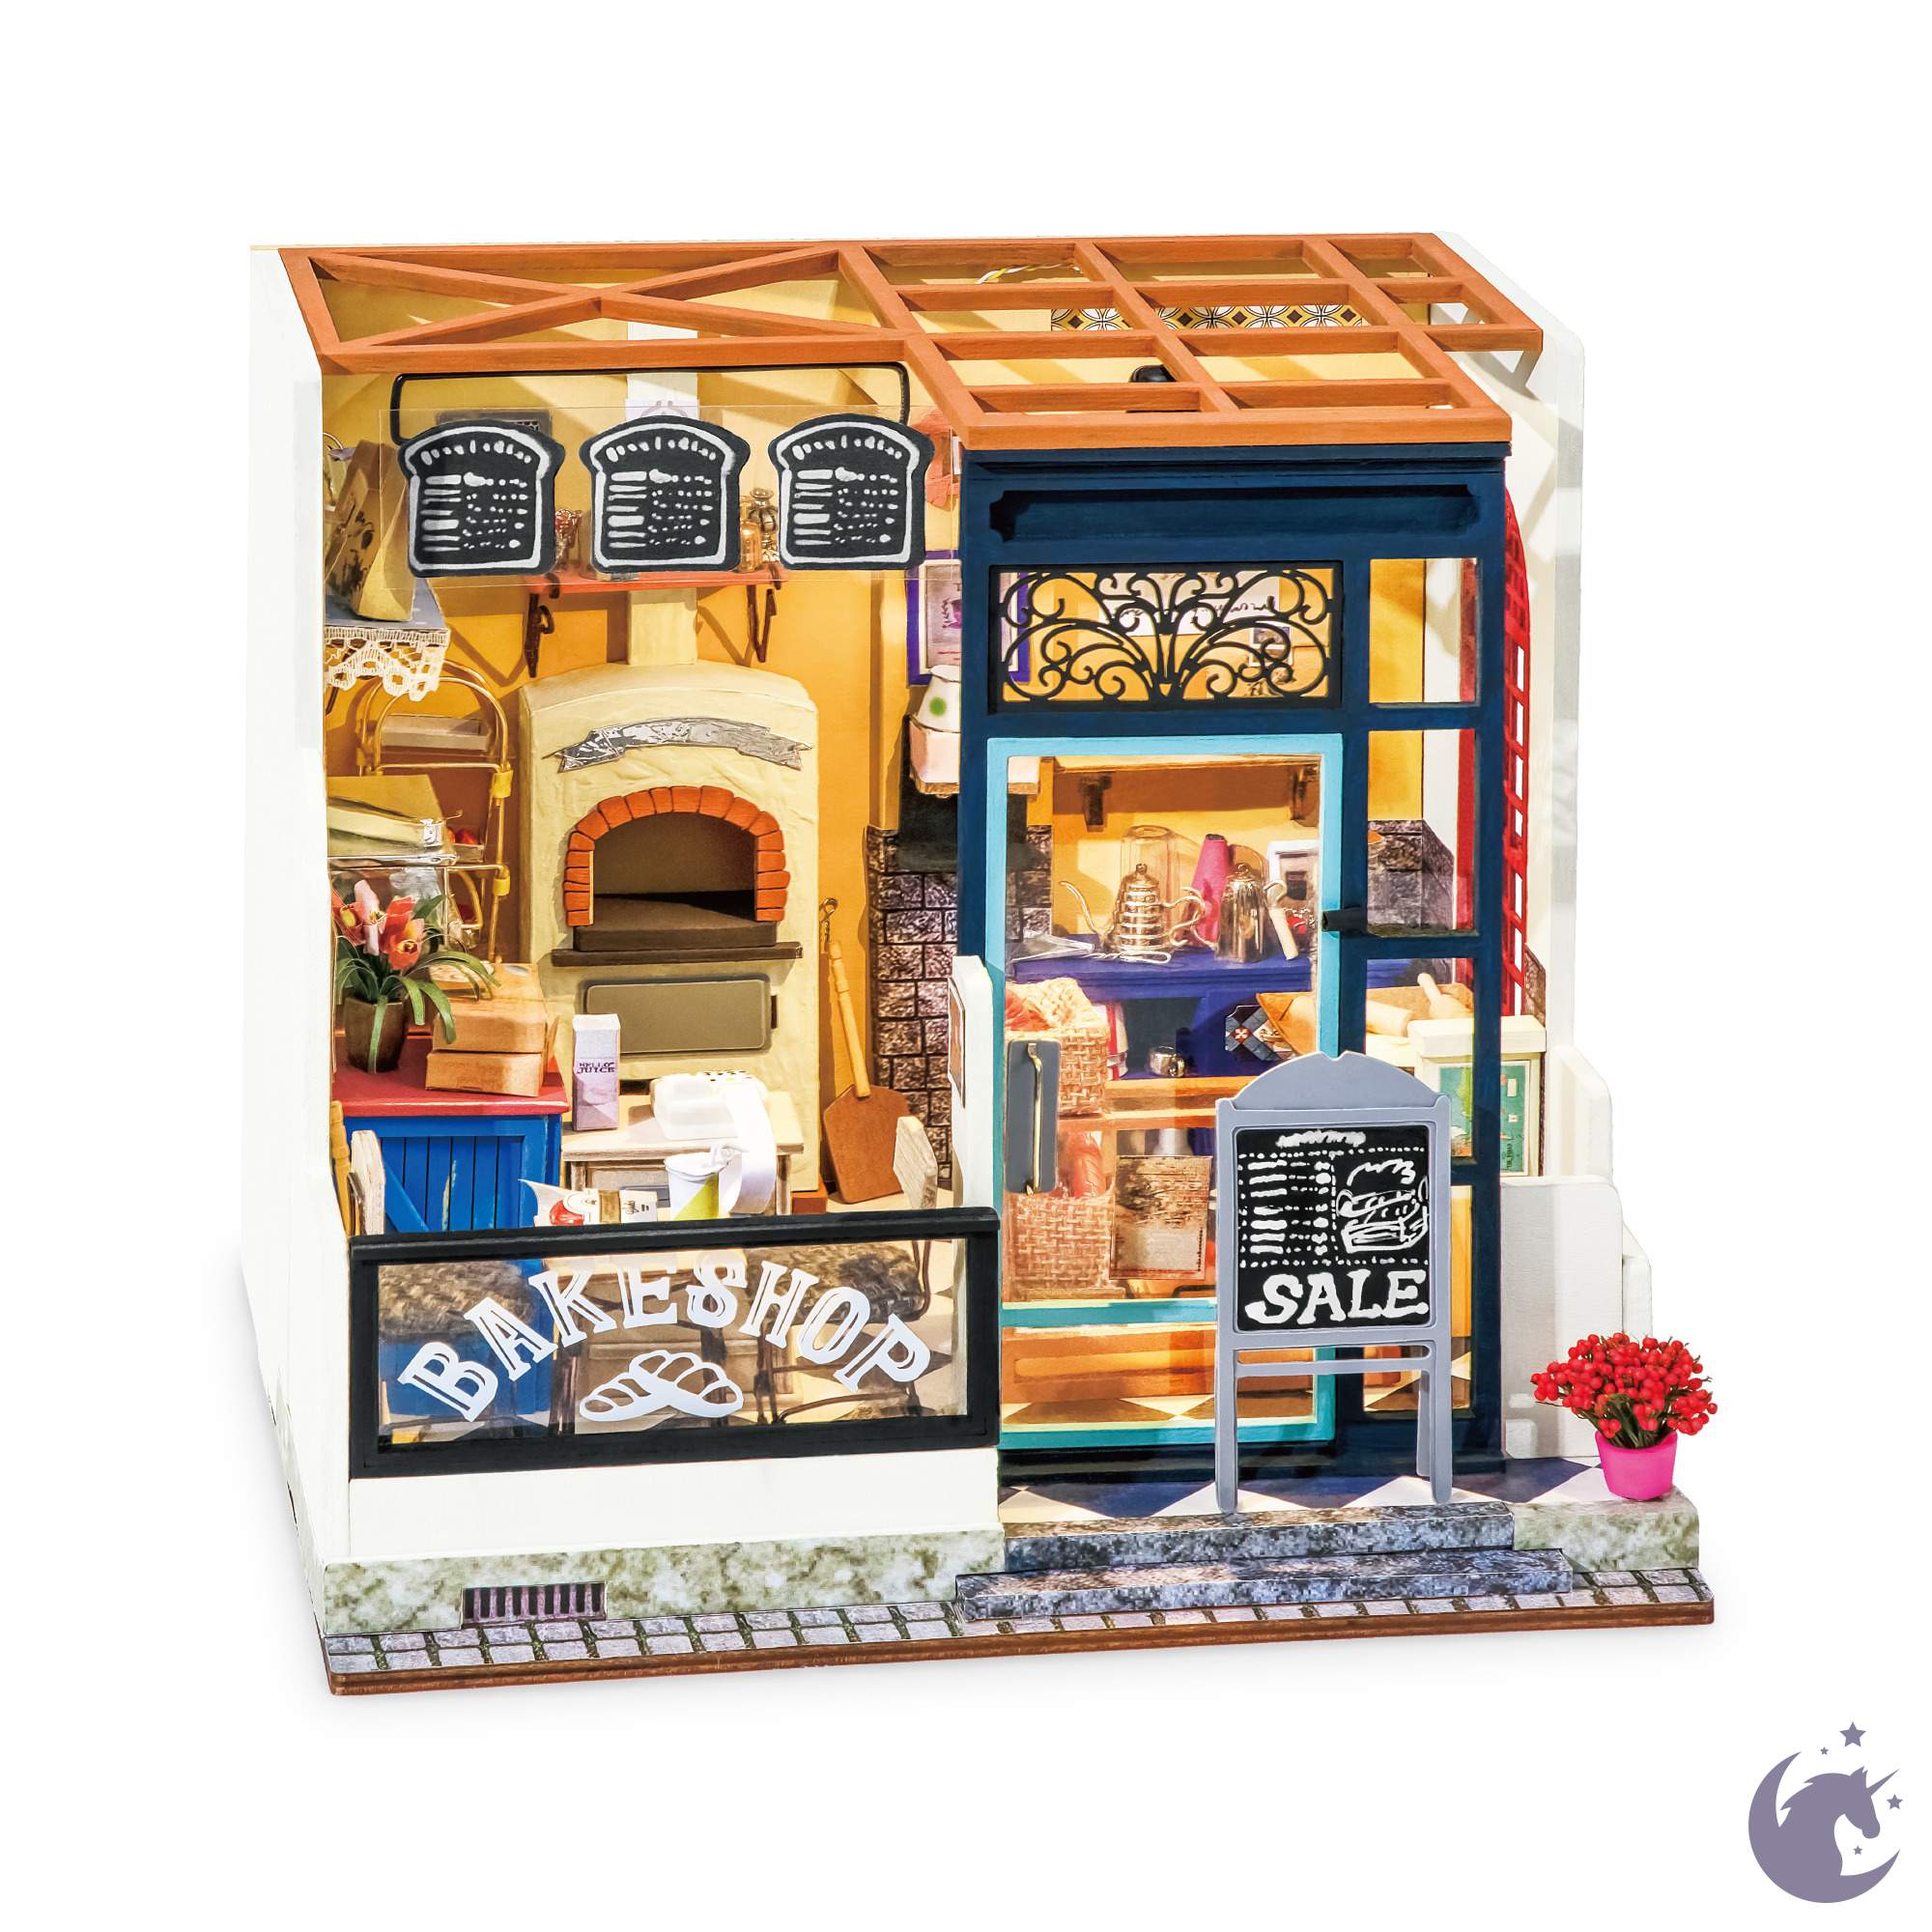 Rolife Honey Ice-cream Shop Miniature Dollhouse Kit